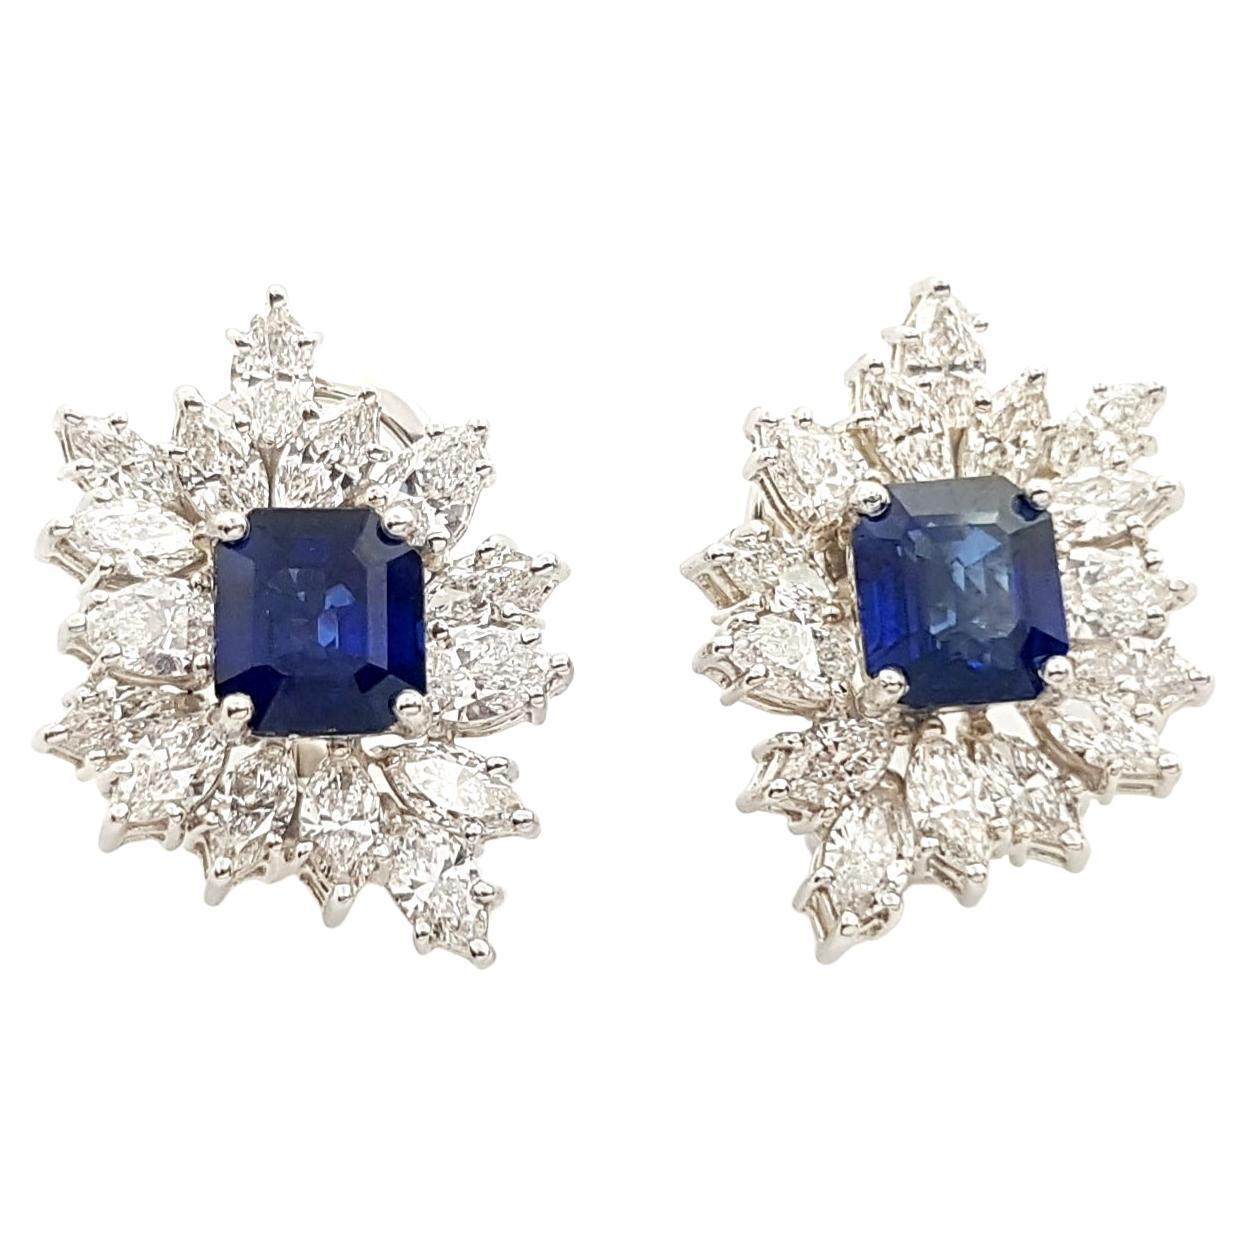 Blue Sapphire with Diamond Earrings set in Platinum 950 Settings